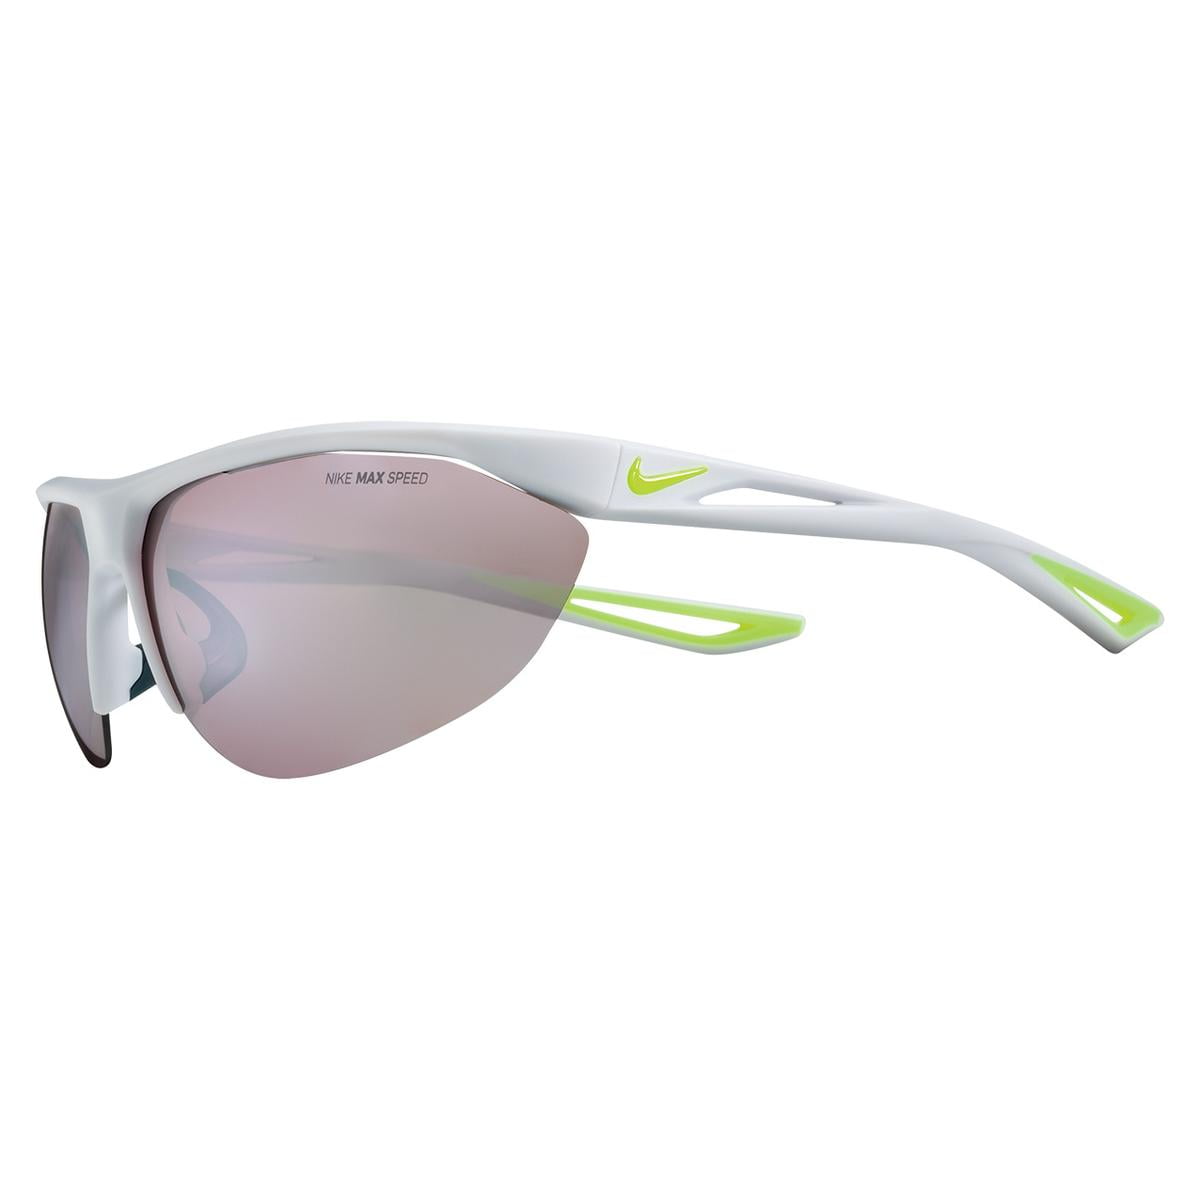 Nike Mens Tailwind Swift Mirrored Wraparound Sunglasses Walmart.com